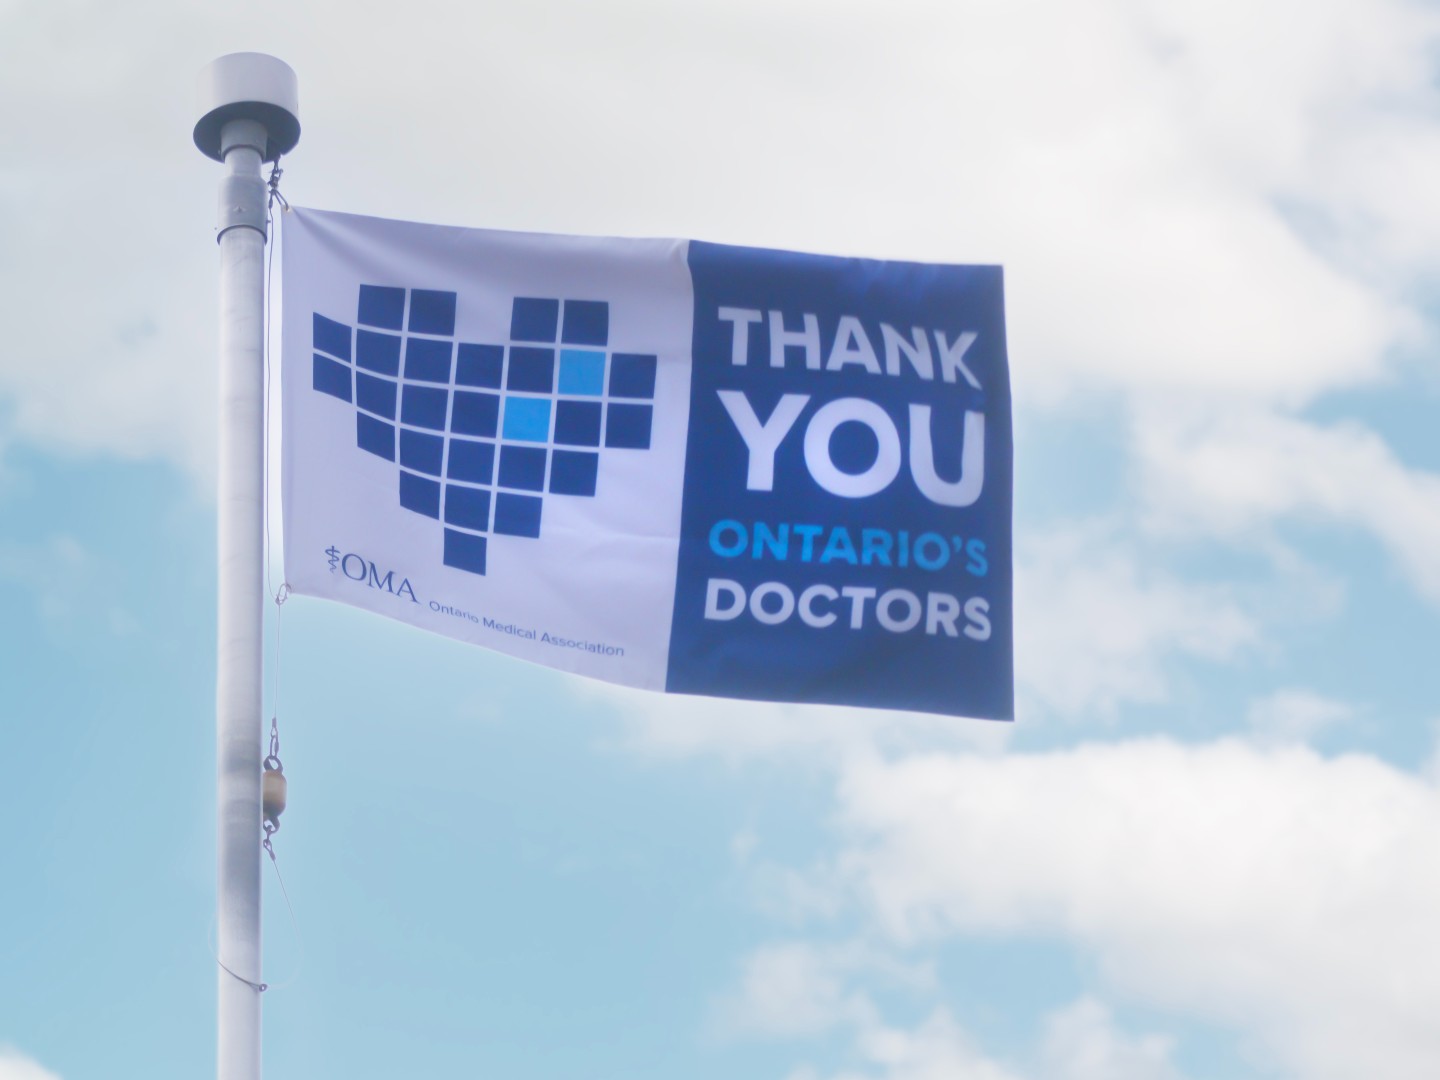 Recognizing Ontario's doctors Image